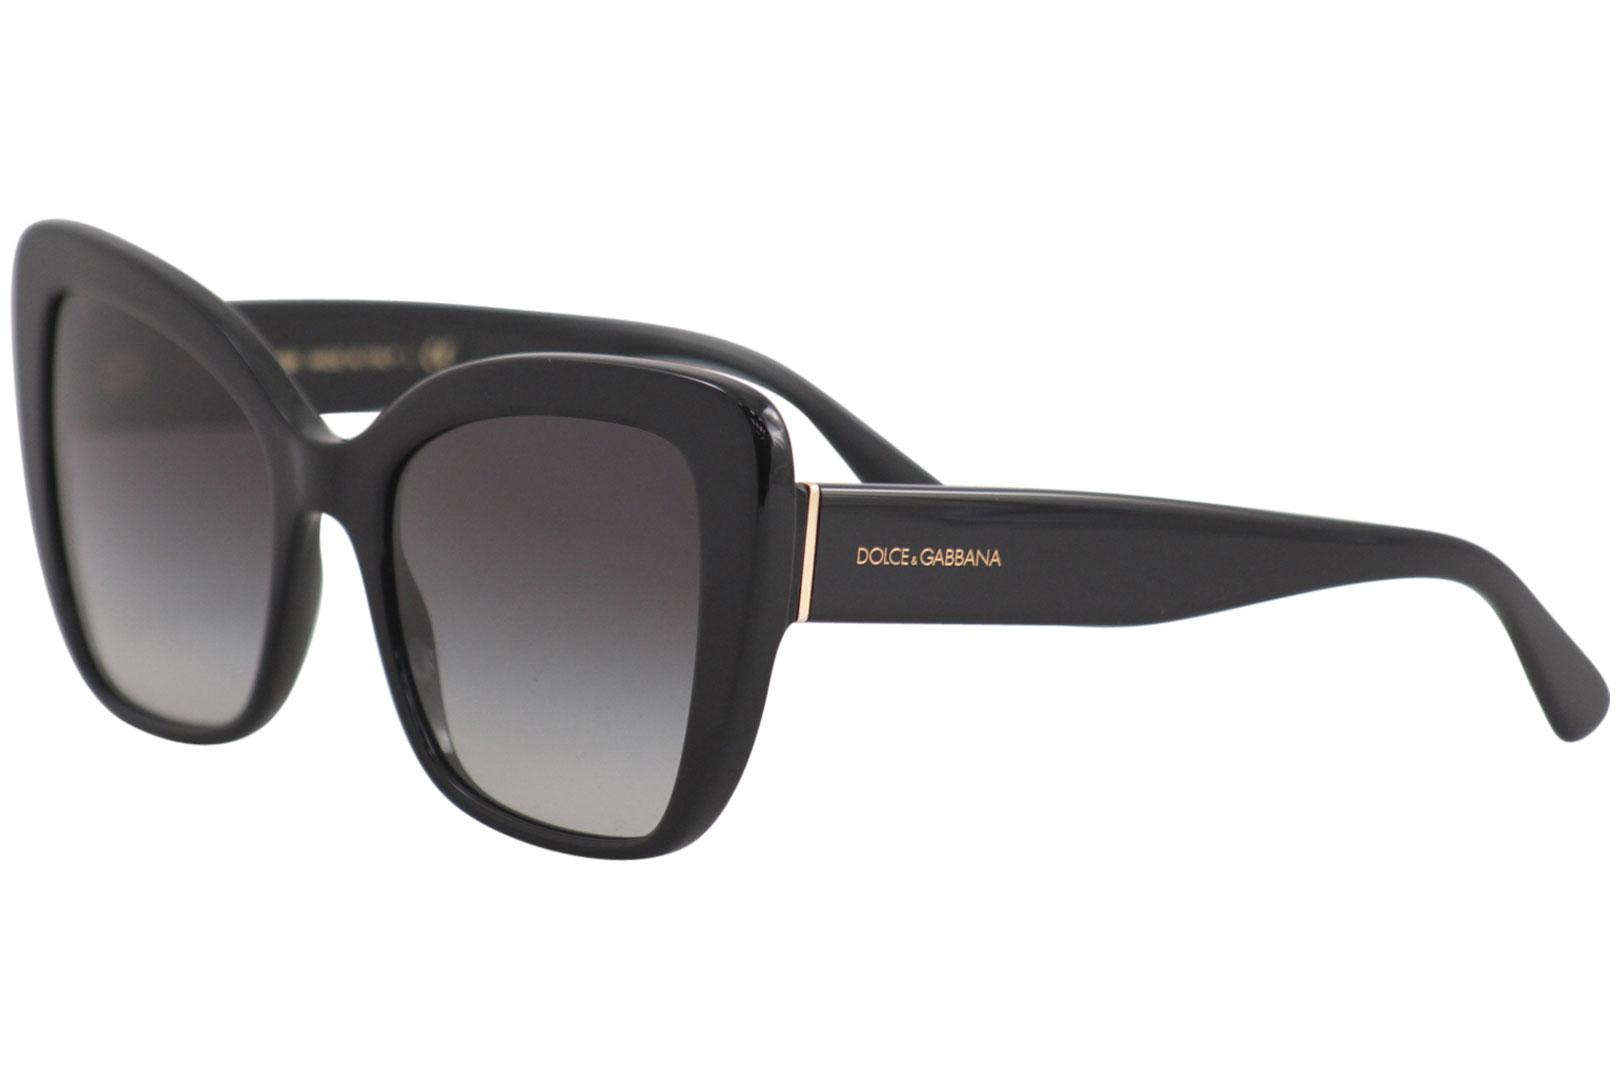 Admitir Misión observación Dolce & Gabbana DG4348 Sunglasses Women's Butterfly Shape | EyeSpecs.com